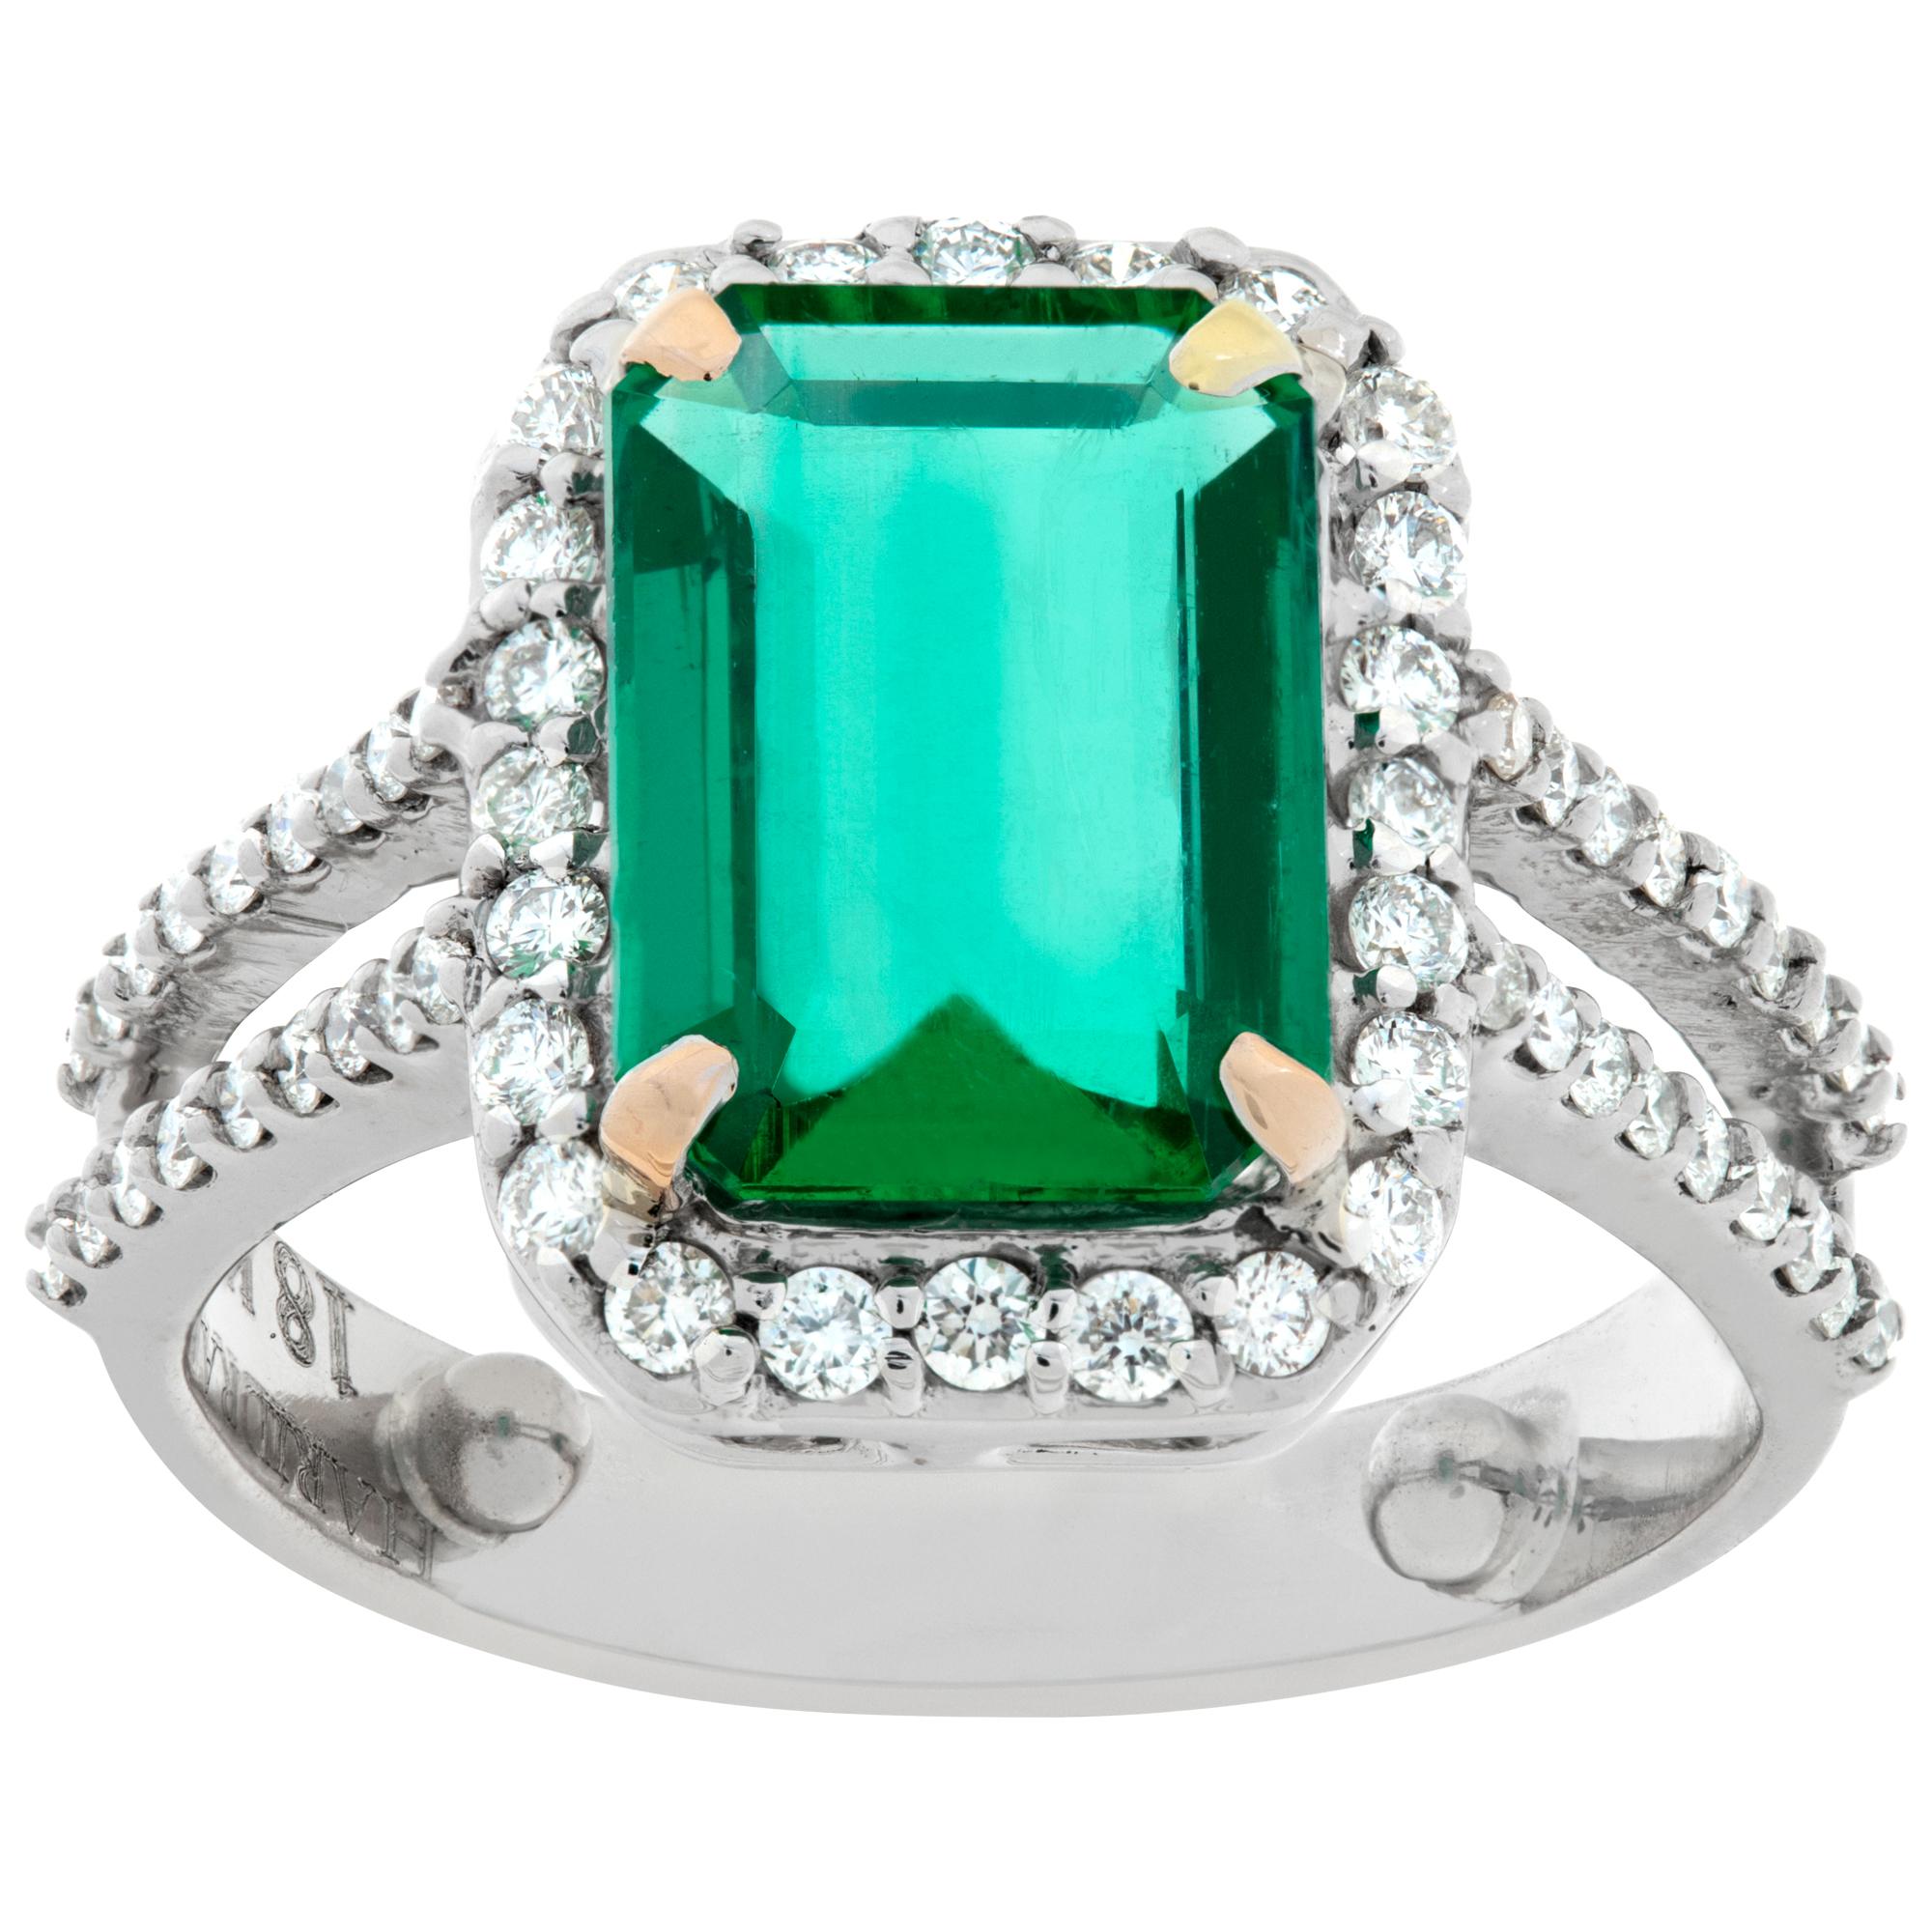 Designer Signed "Haridra- Ny" Emerald and Diamonds 18k White Gold Ring